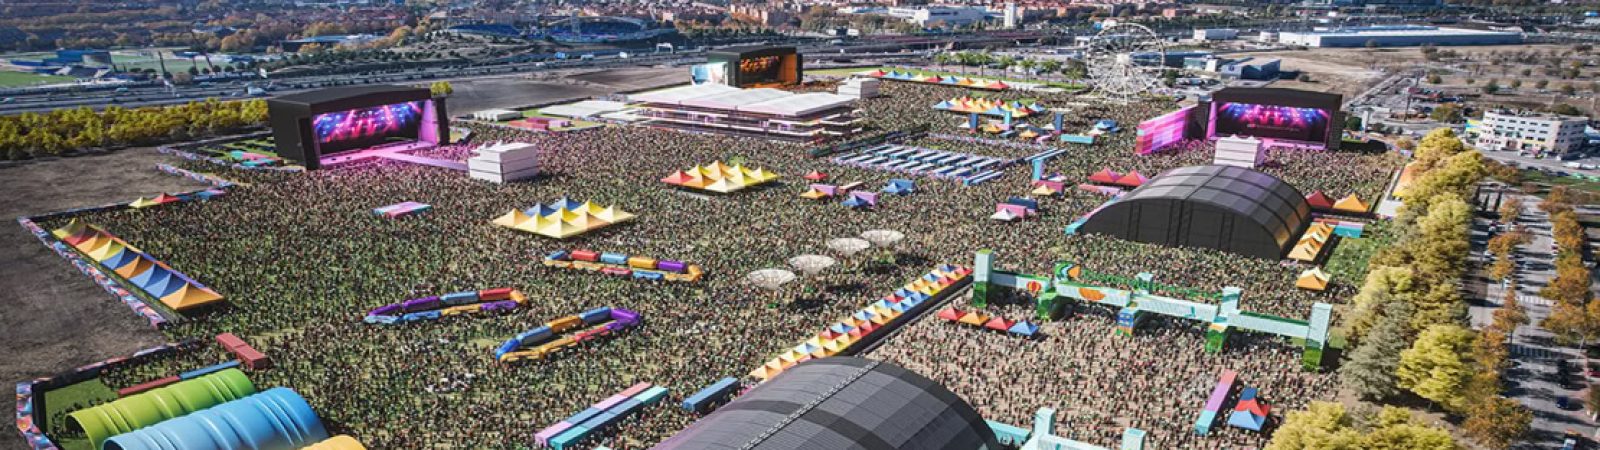 iberdrola music madrid imagen del festival desde el aire